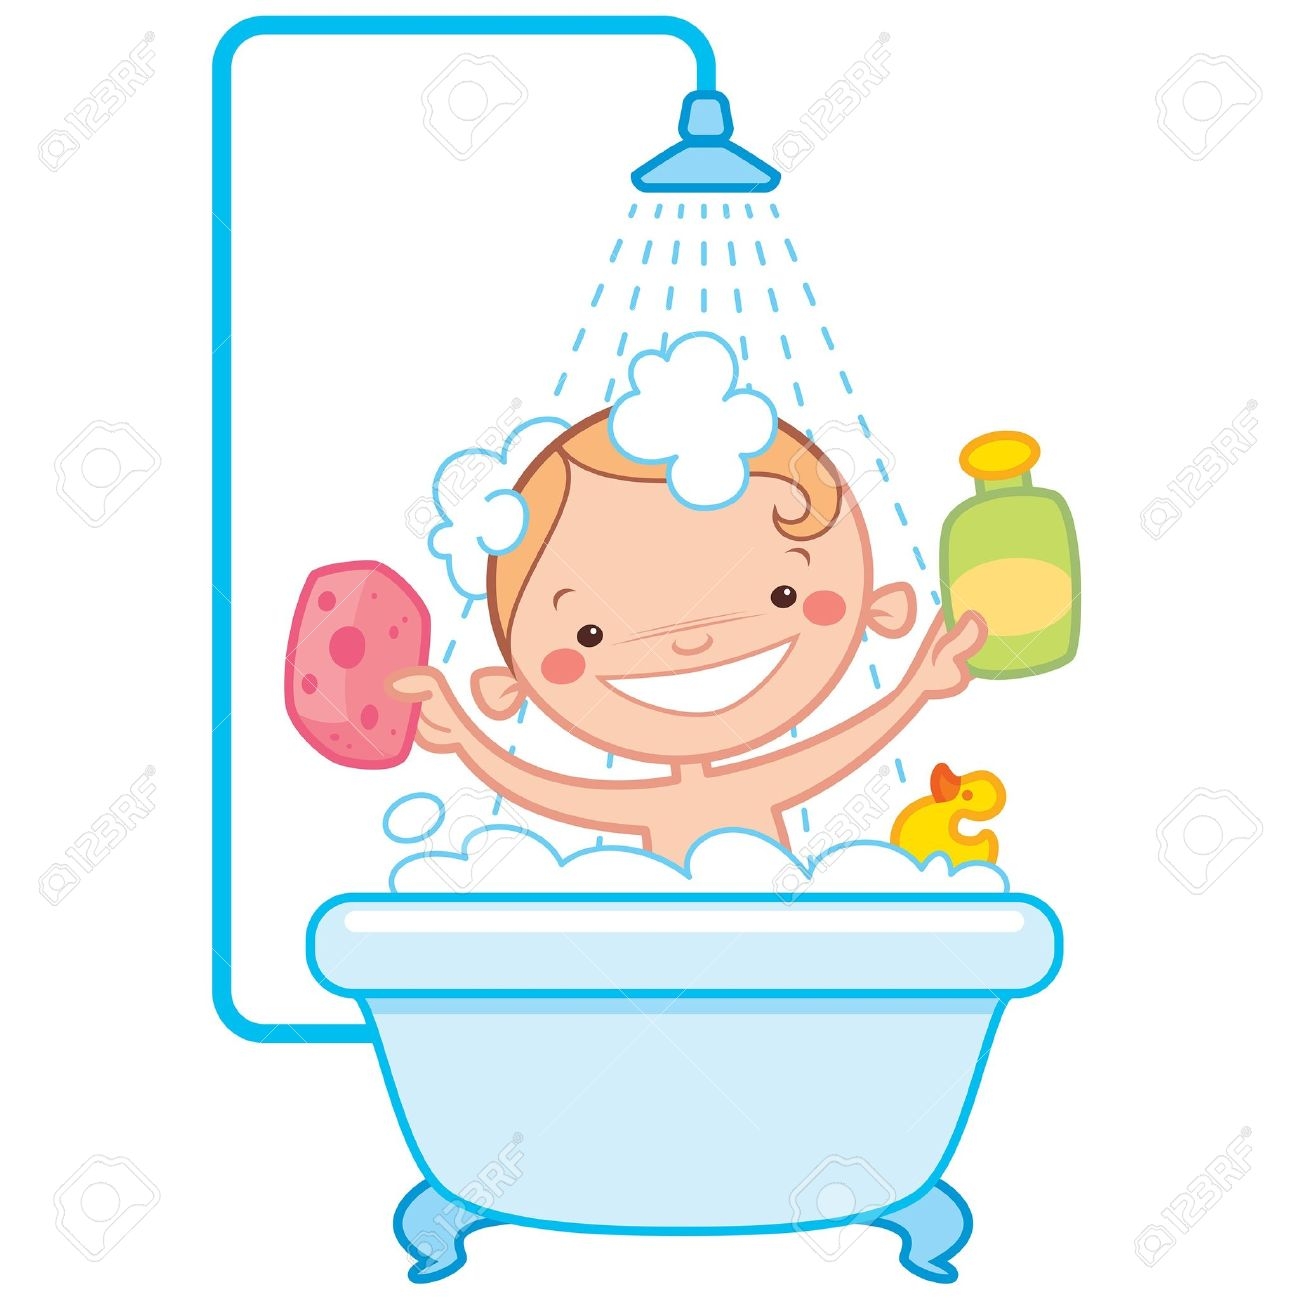 showering clipart bathtime